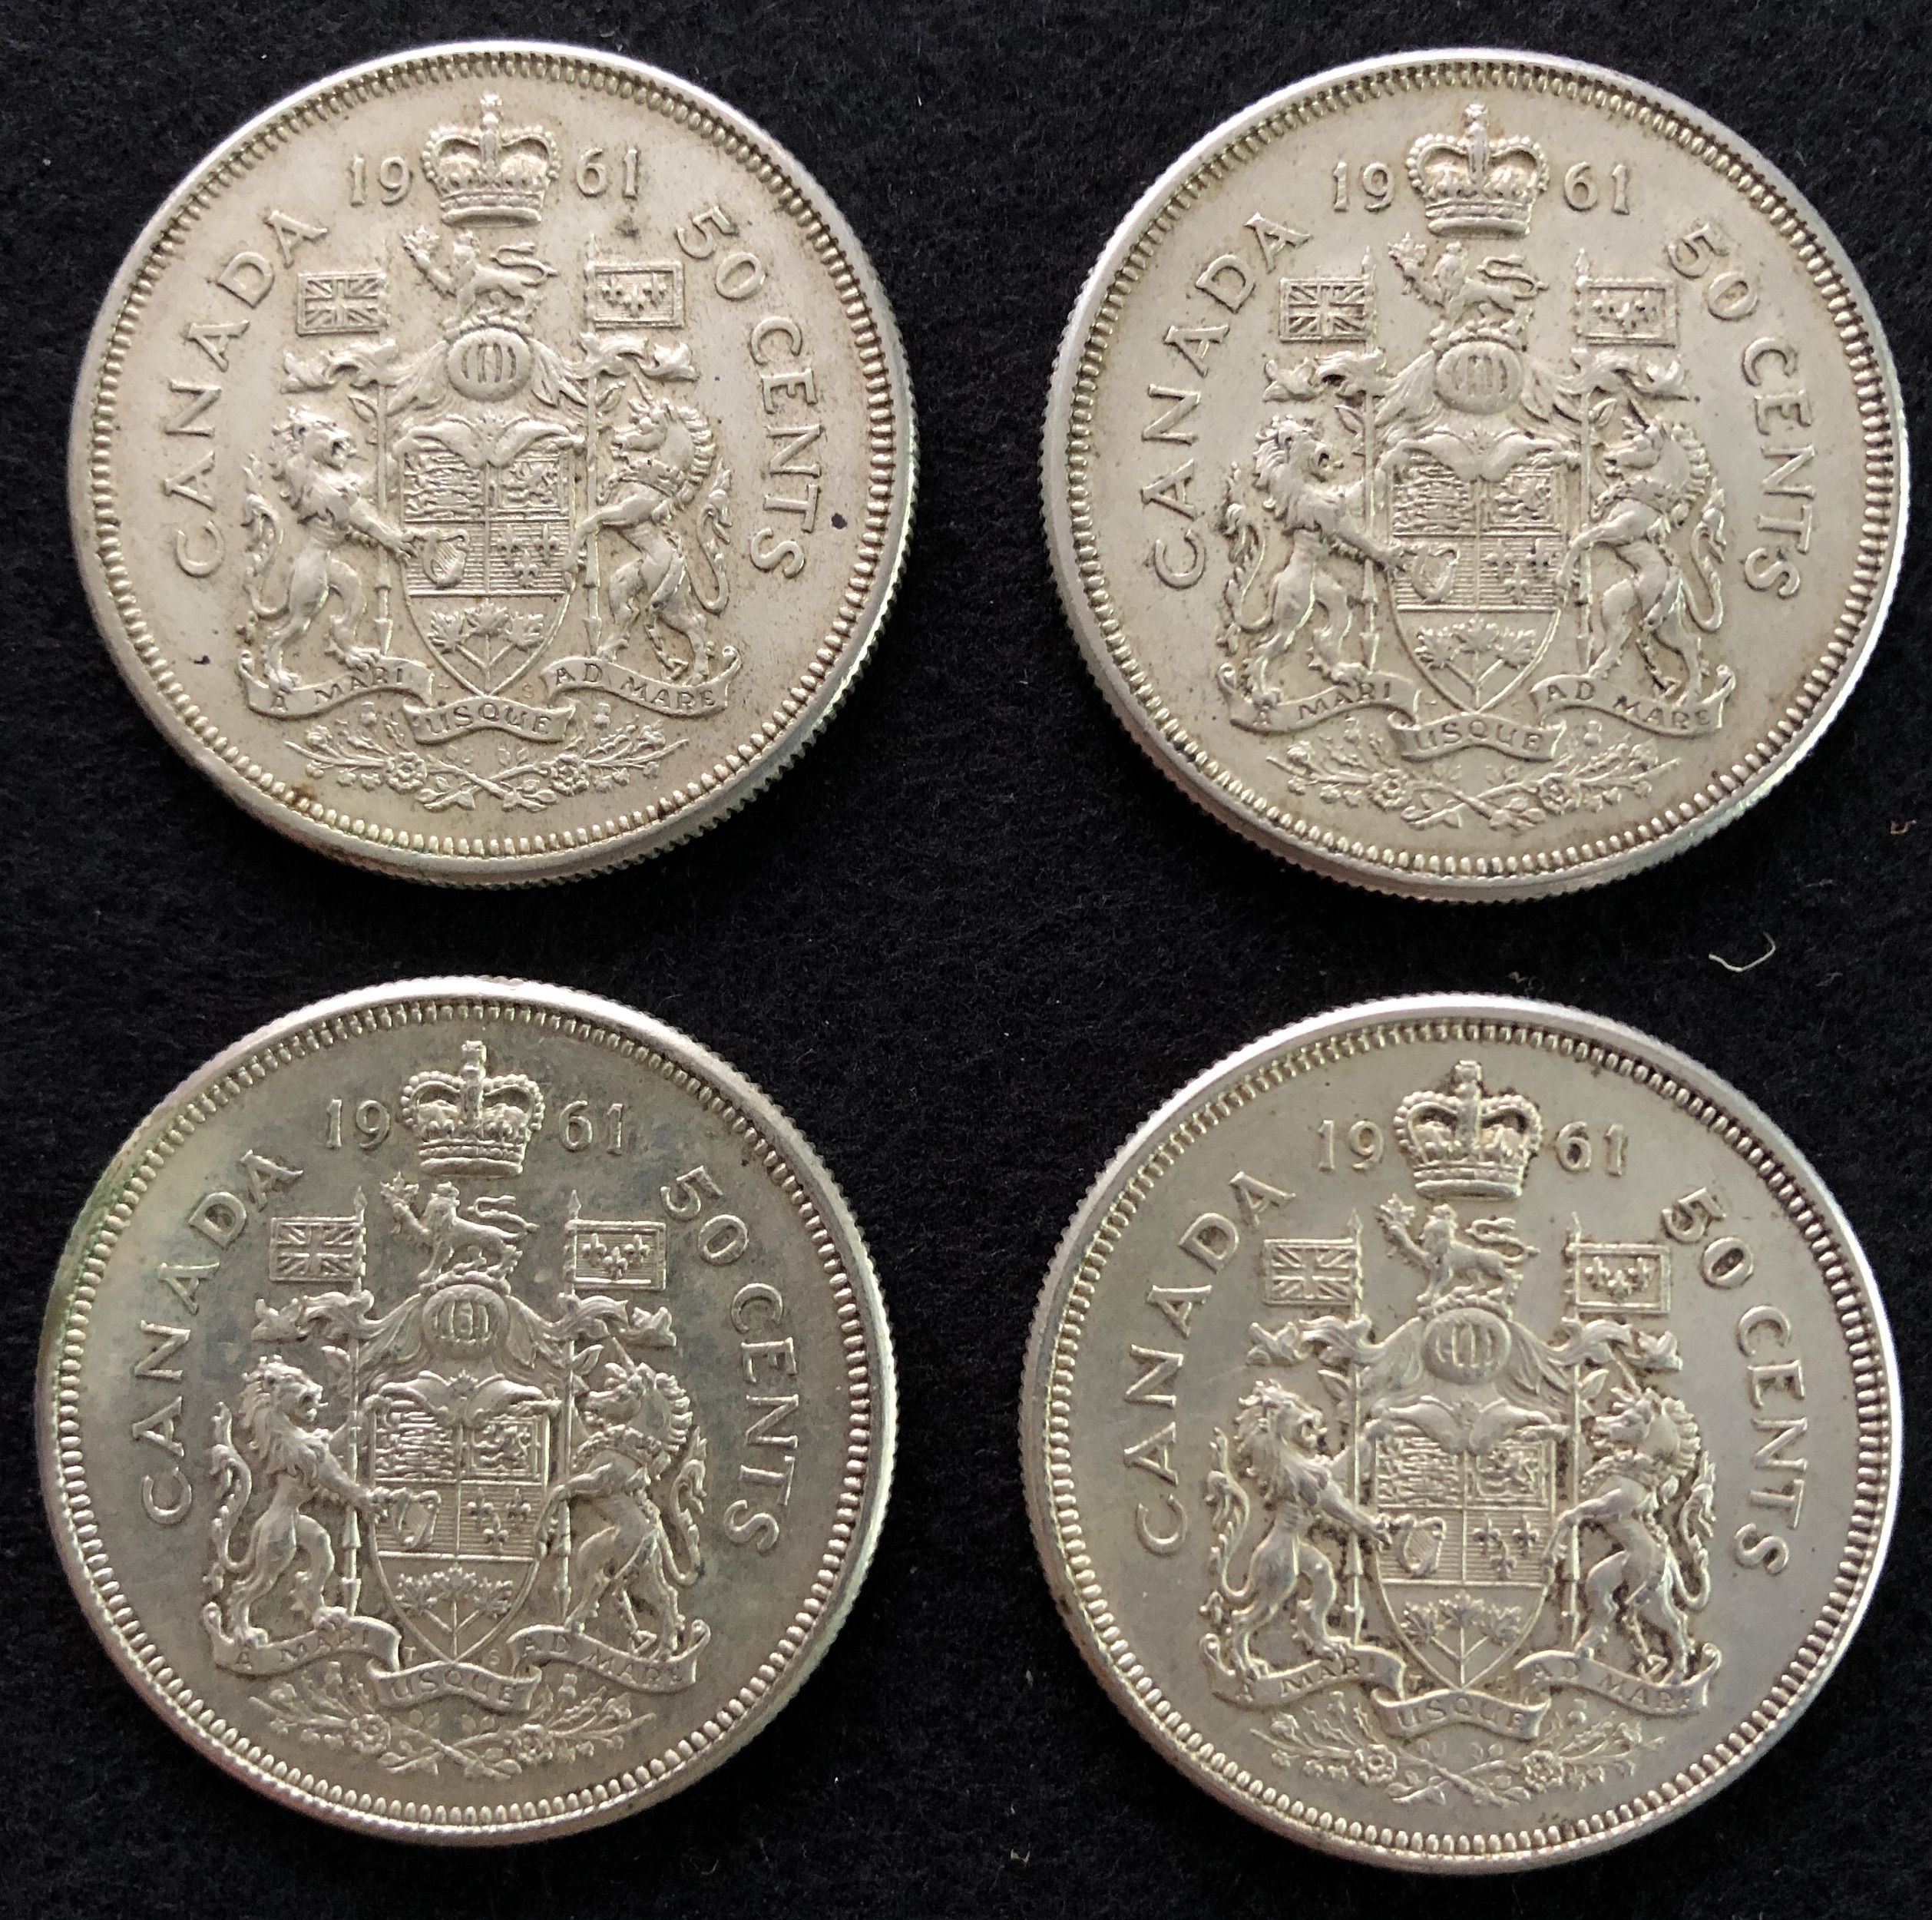 50 cents - 1961.JPG